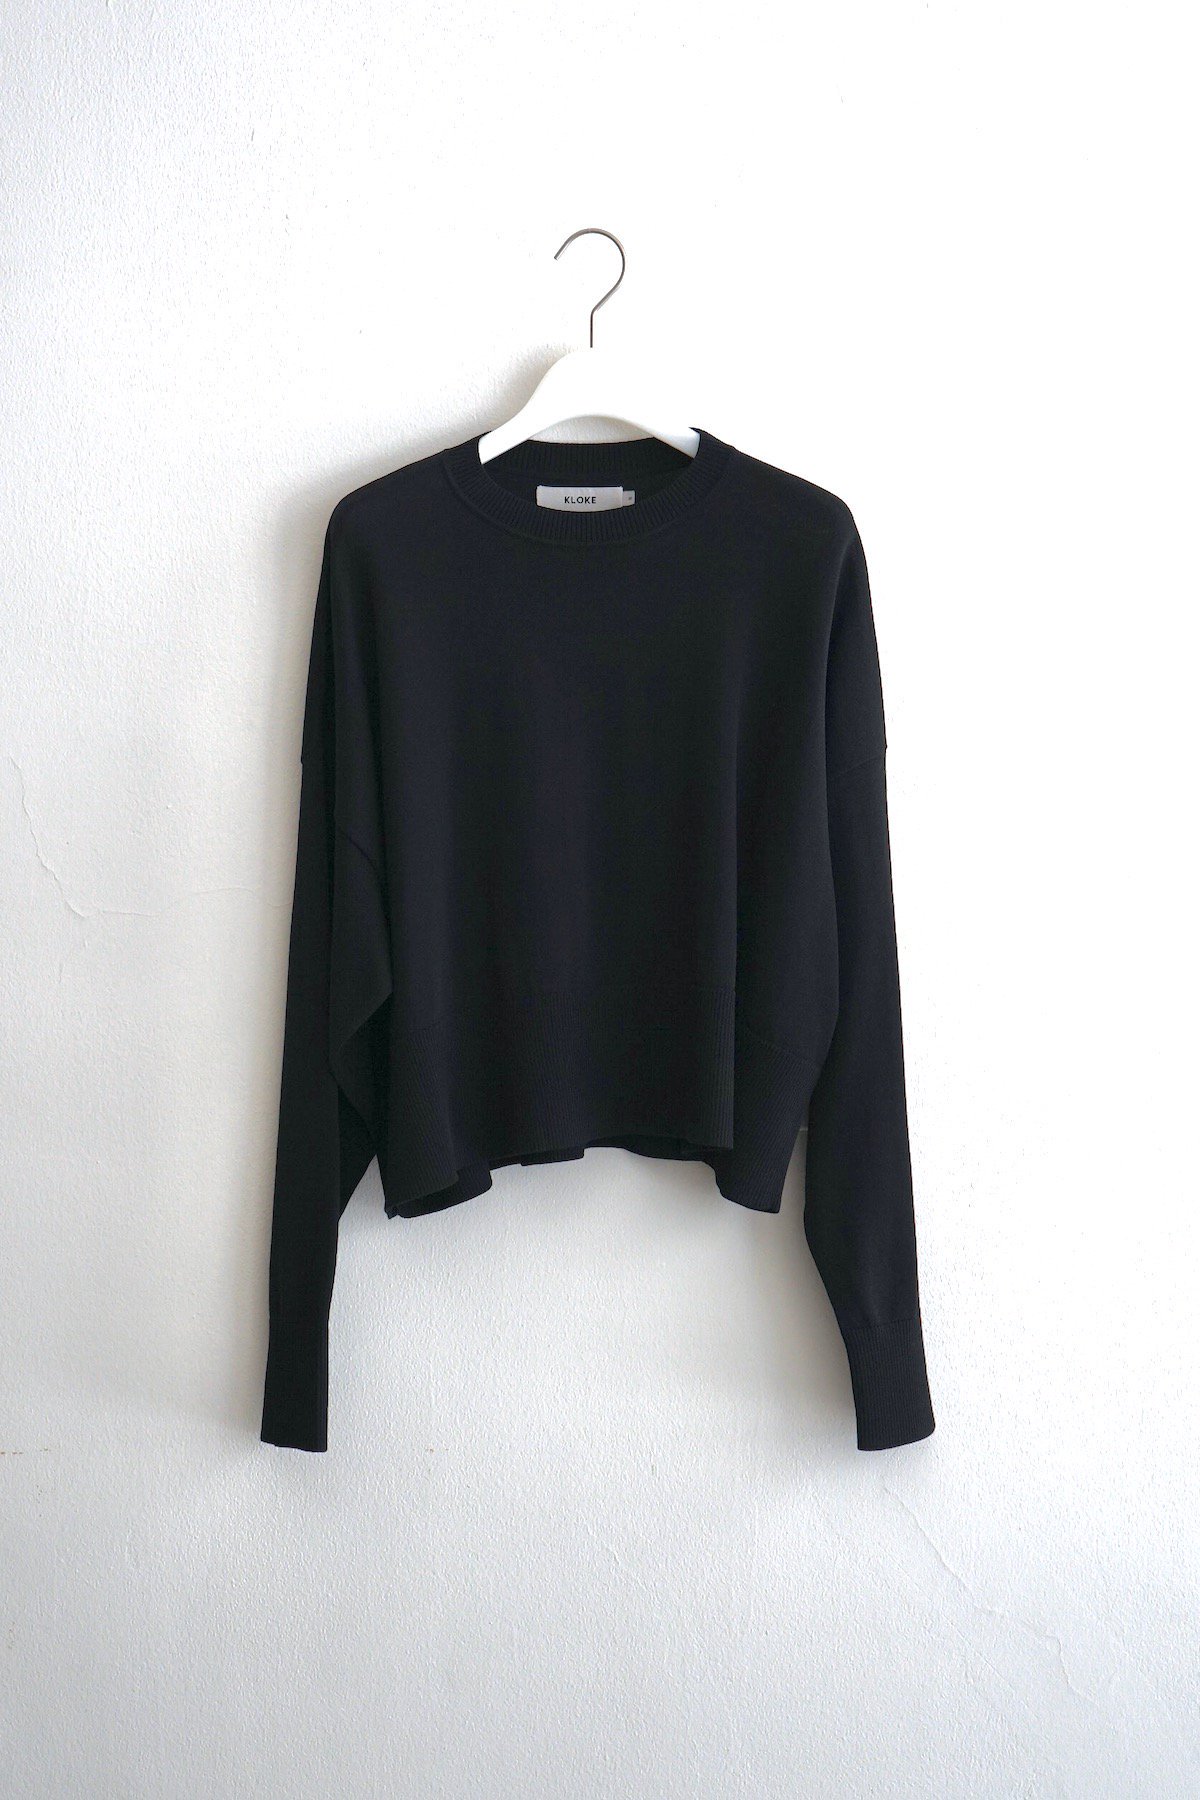 KLOKE / Swerve Keyhole Sweater / Black